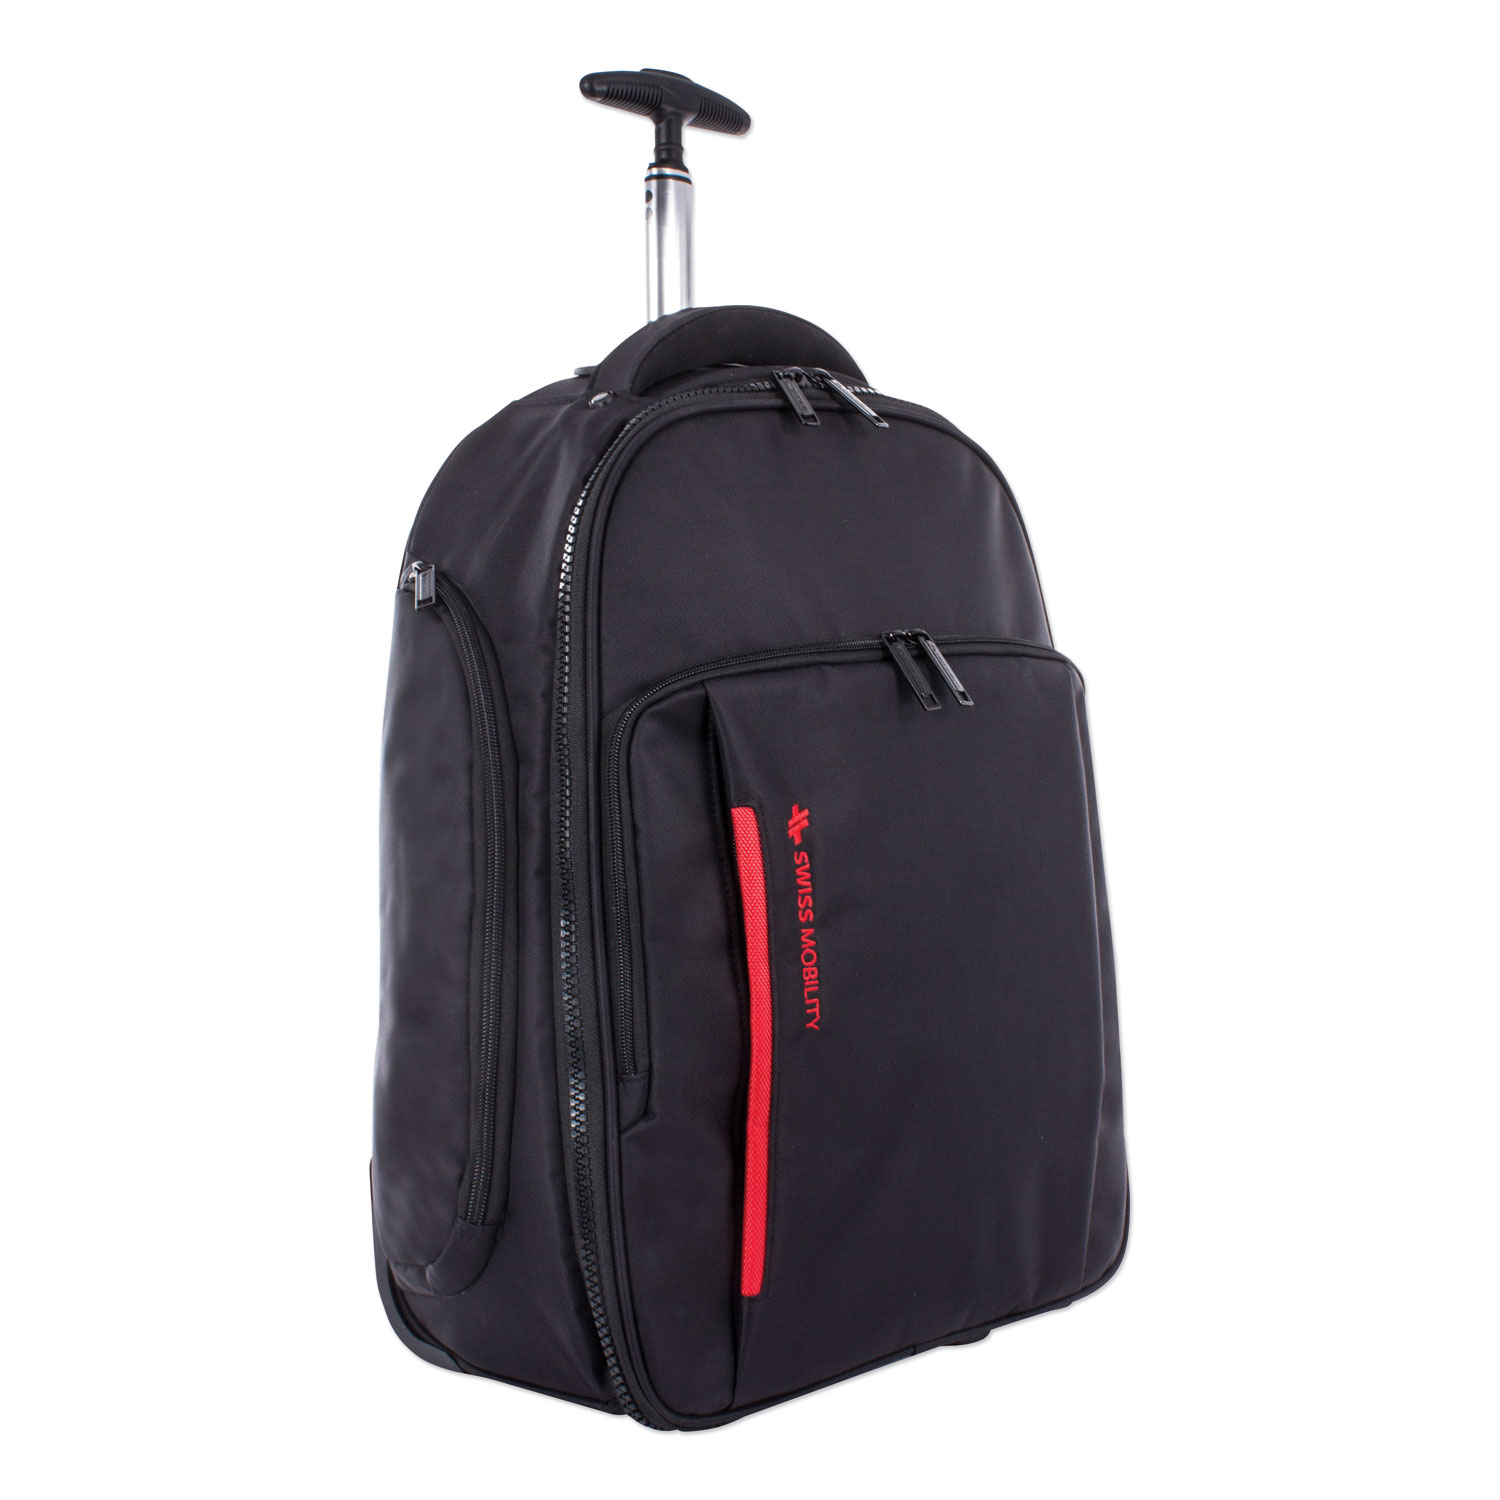 Stride Business Backpack On Wheels, For Laptops 15.6", 10" x 10" x 21.5", Black